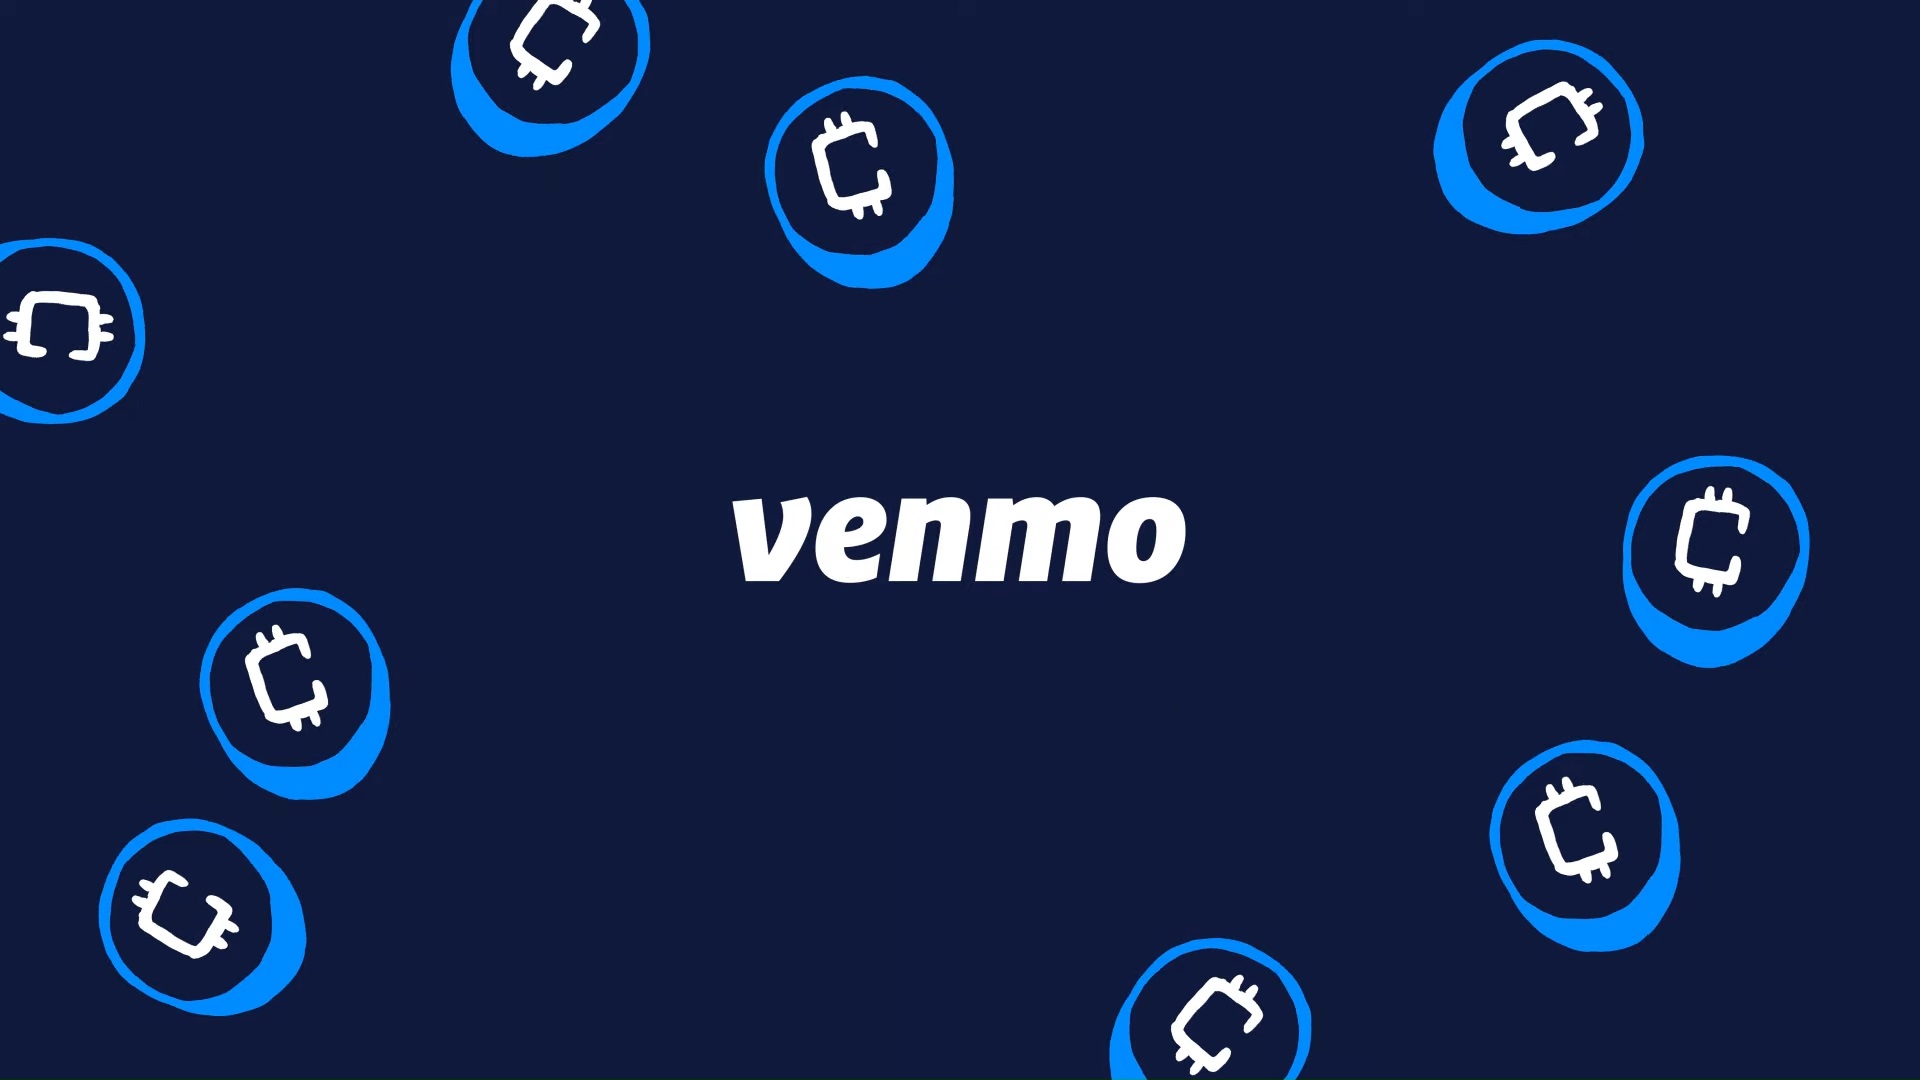 how to buy crypto on venmo app